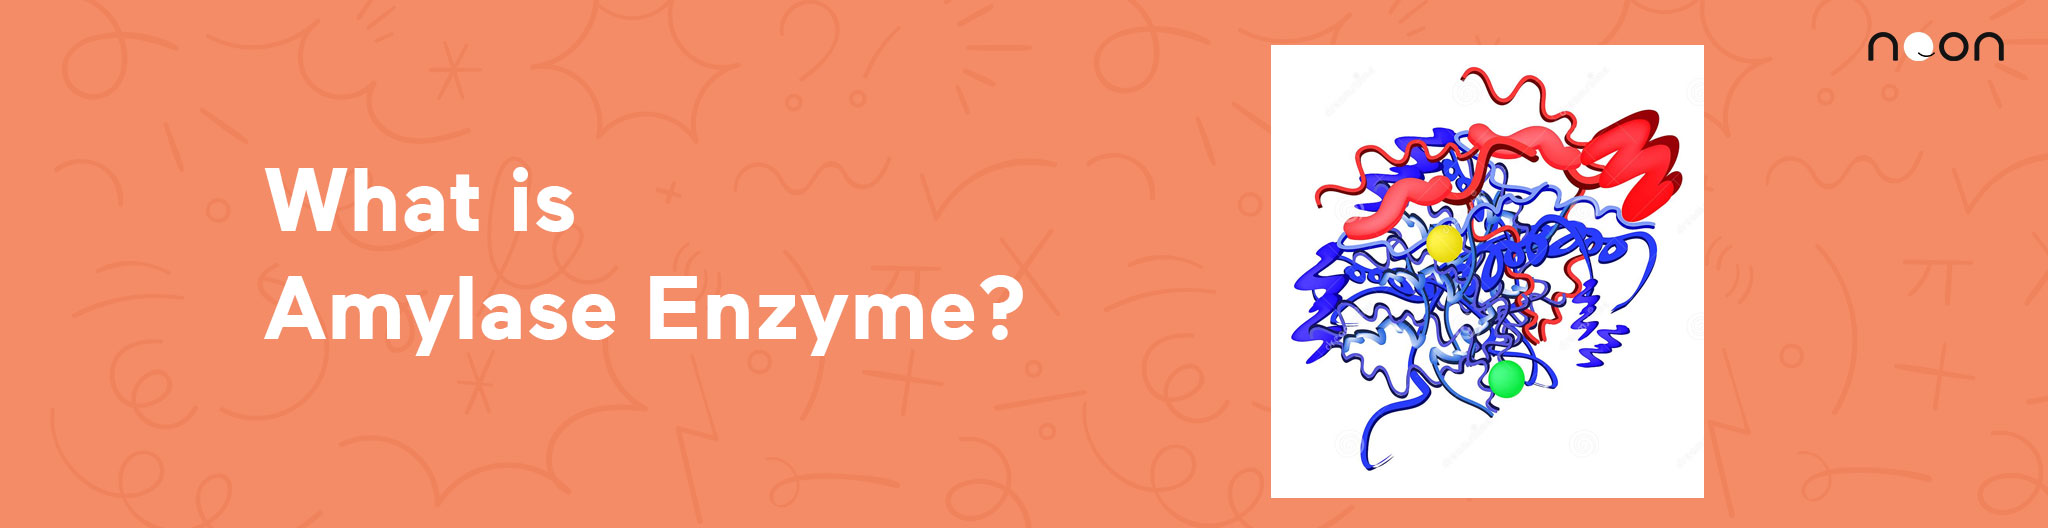 Amylase Enzyme 